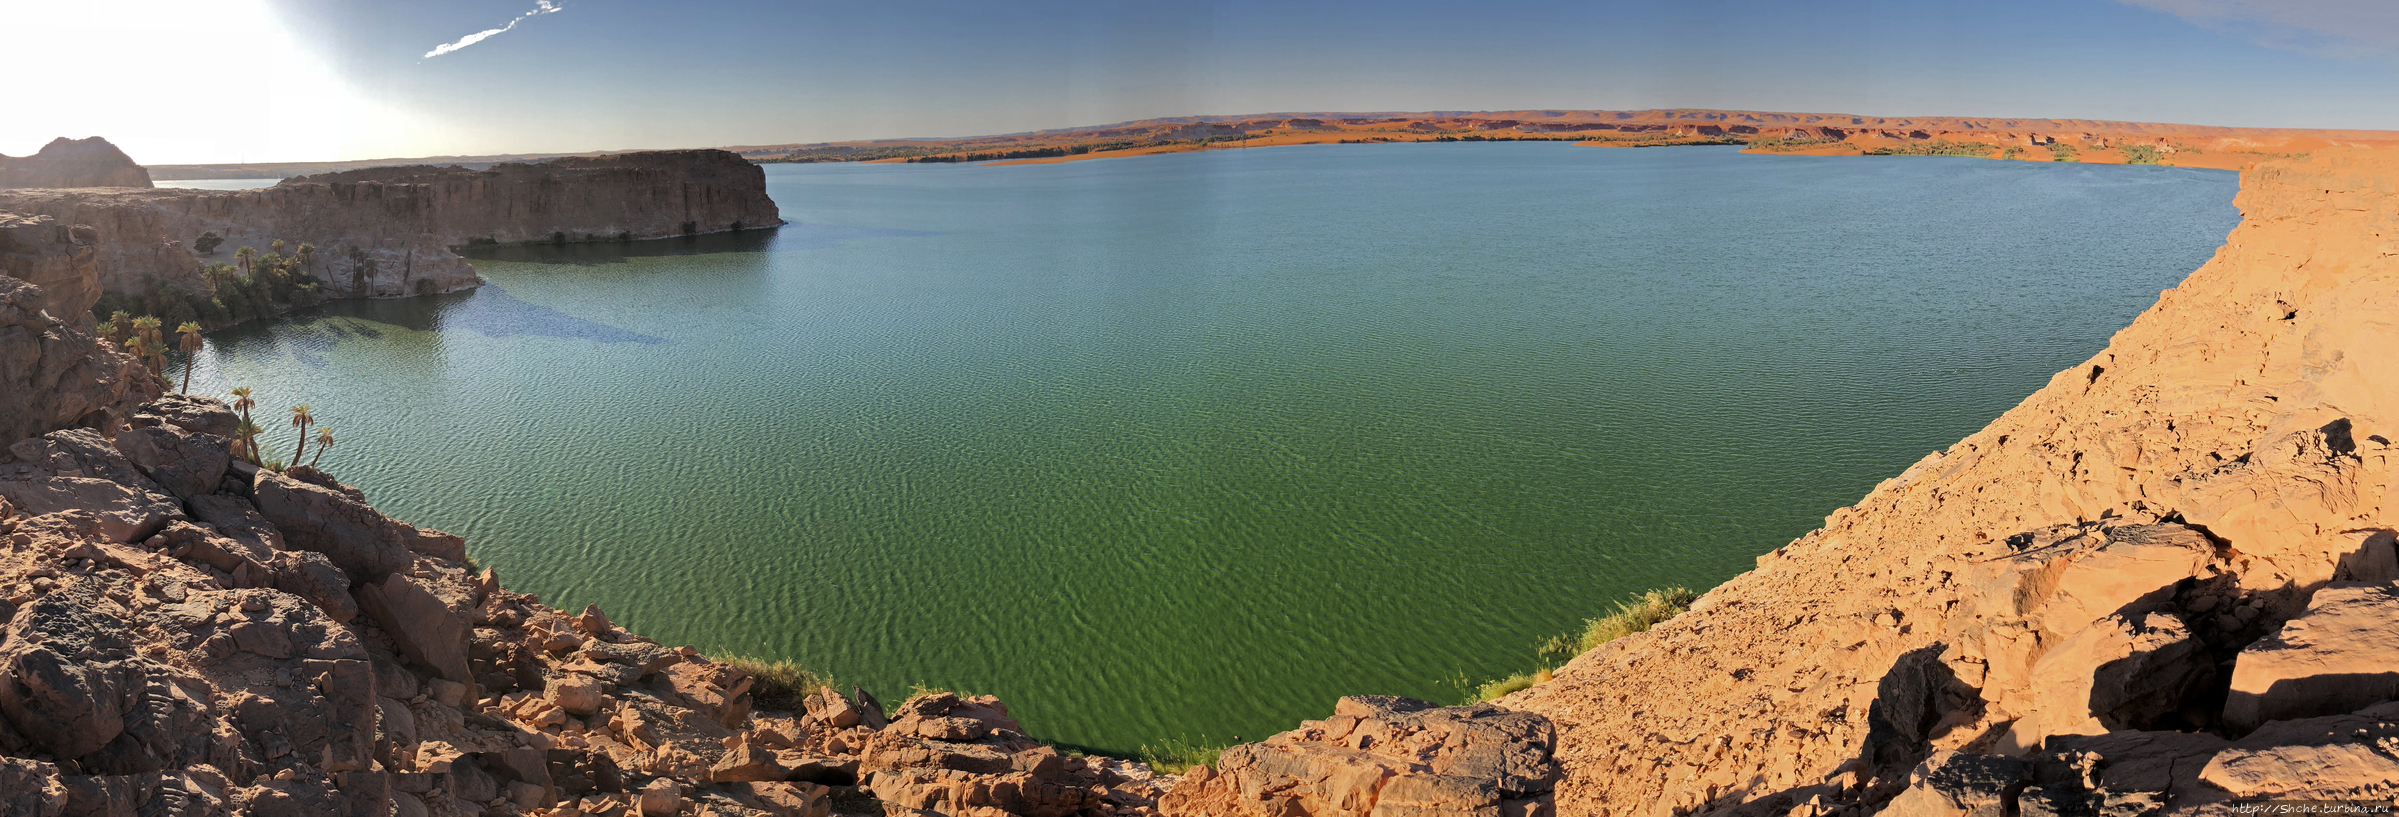 Озеро в африке 4. Озеро Чад. Унианга-Кебир, Чад. Парк бассейна озера Чад. Озеро Чад заболоченное.